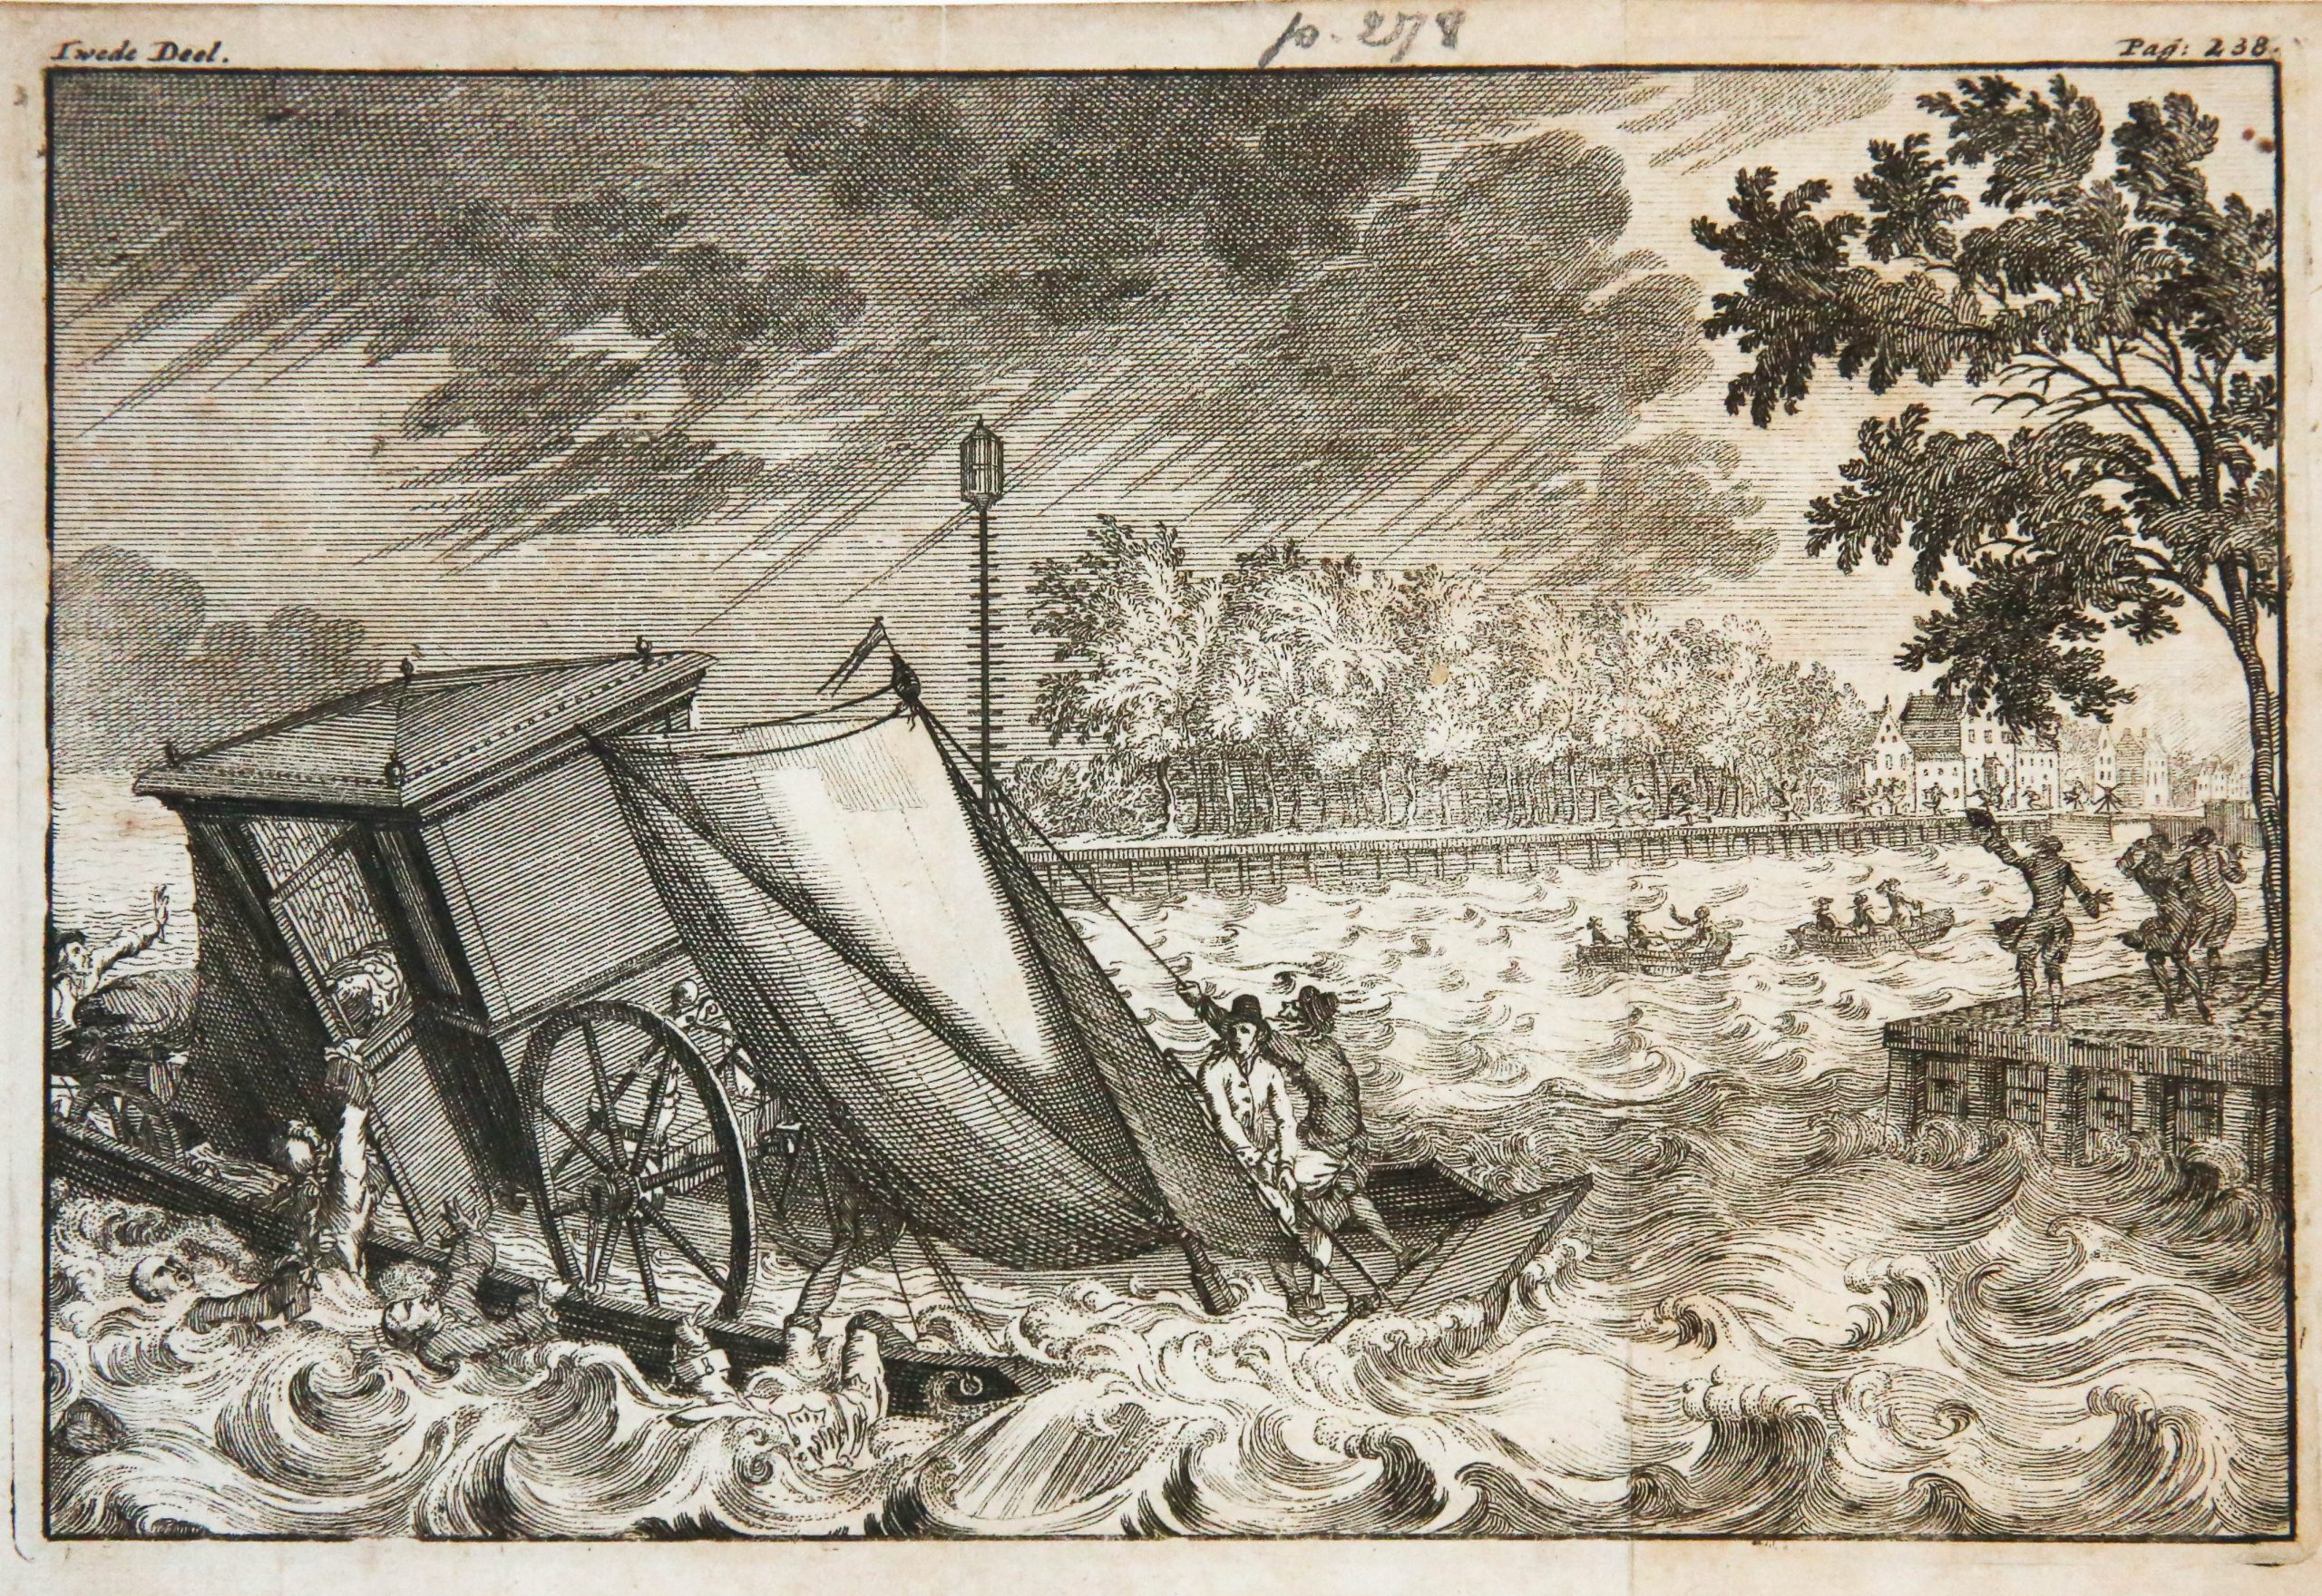 Verdrinken van Johan Willem Friso, death by drowning of Prince John William Friso, 1711.